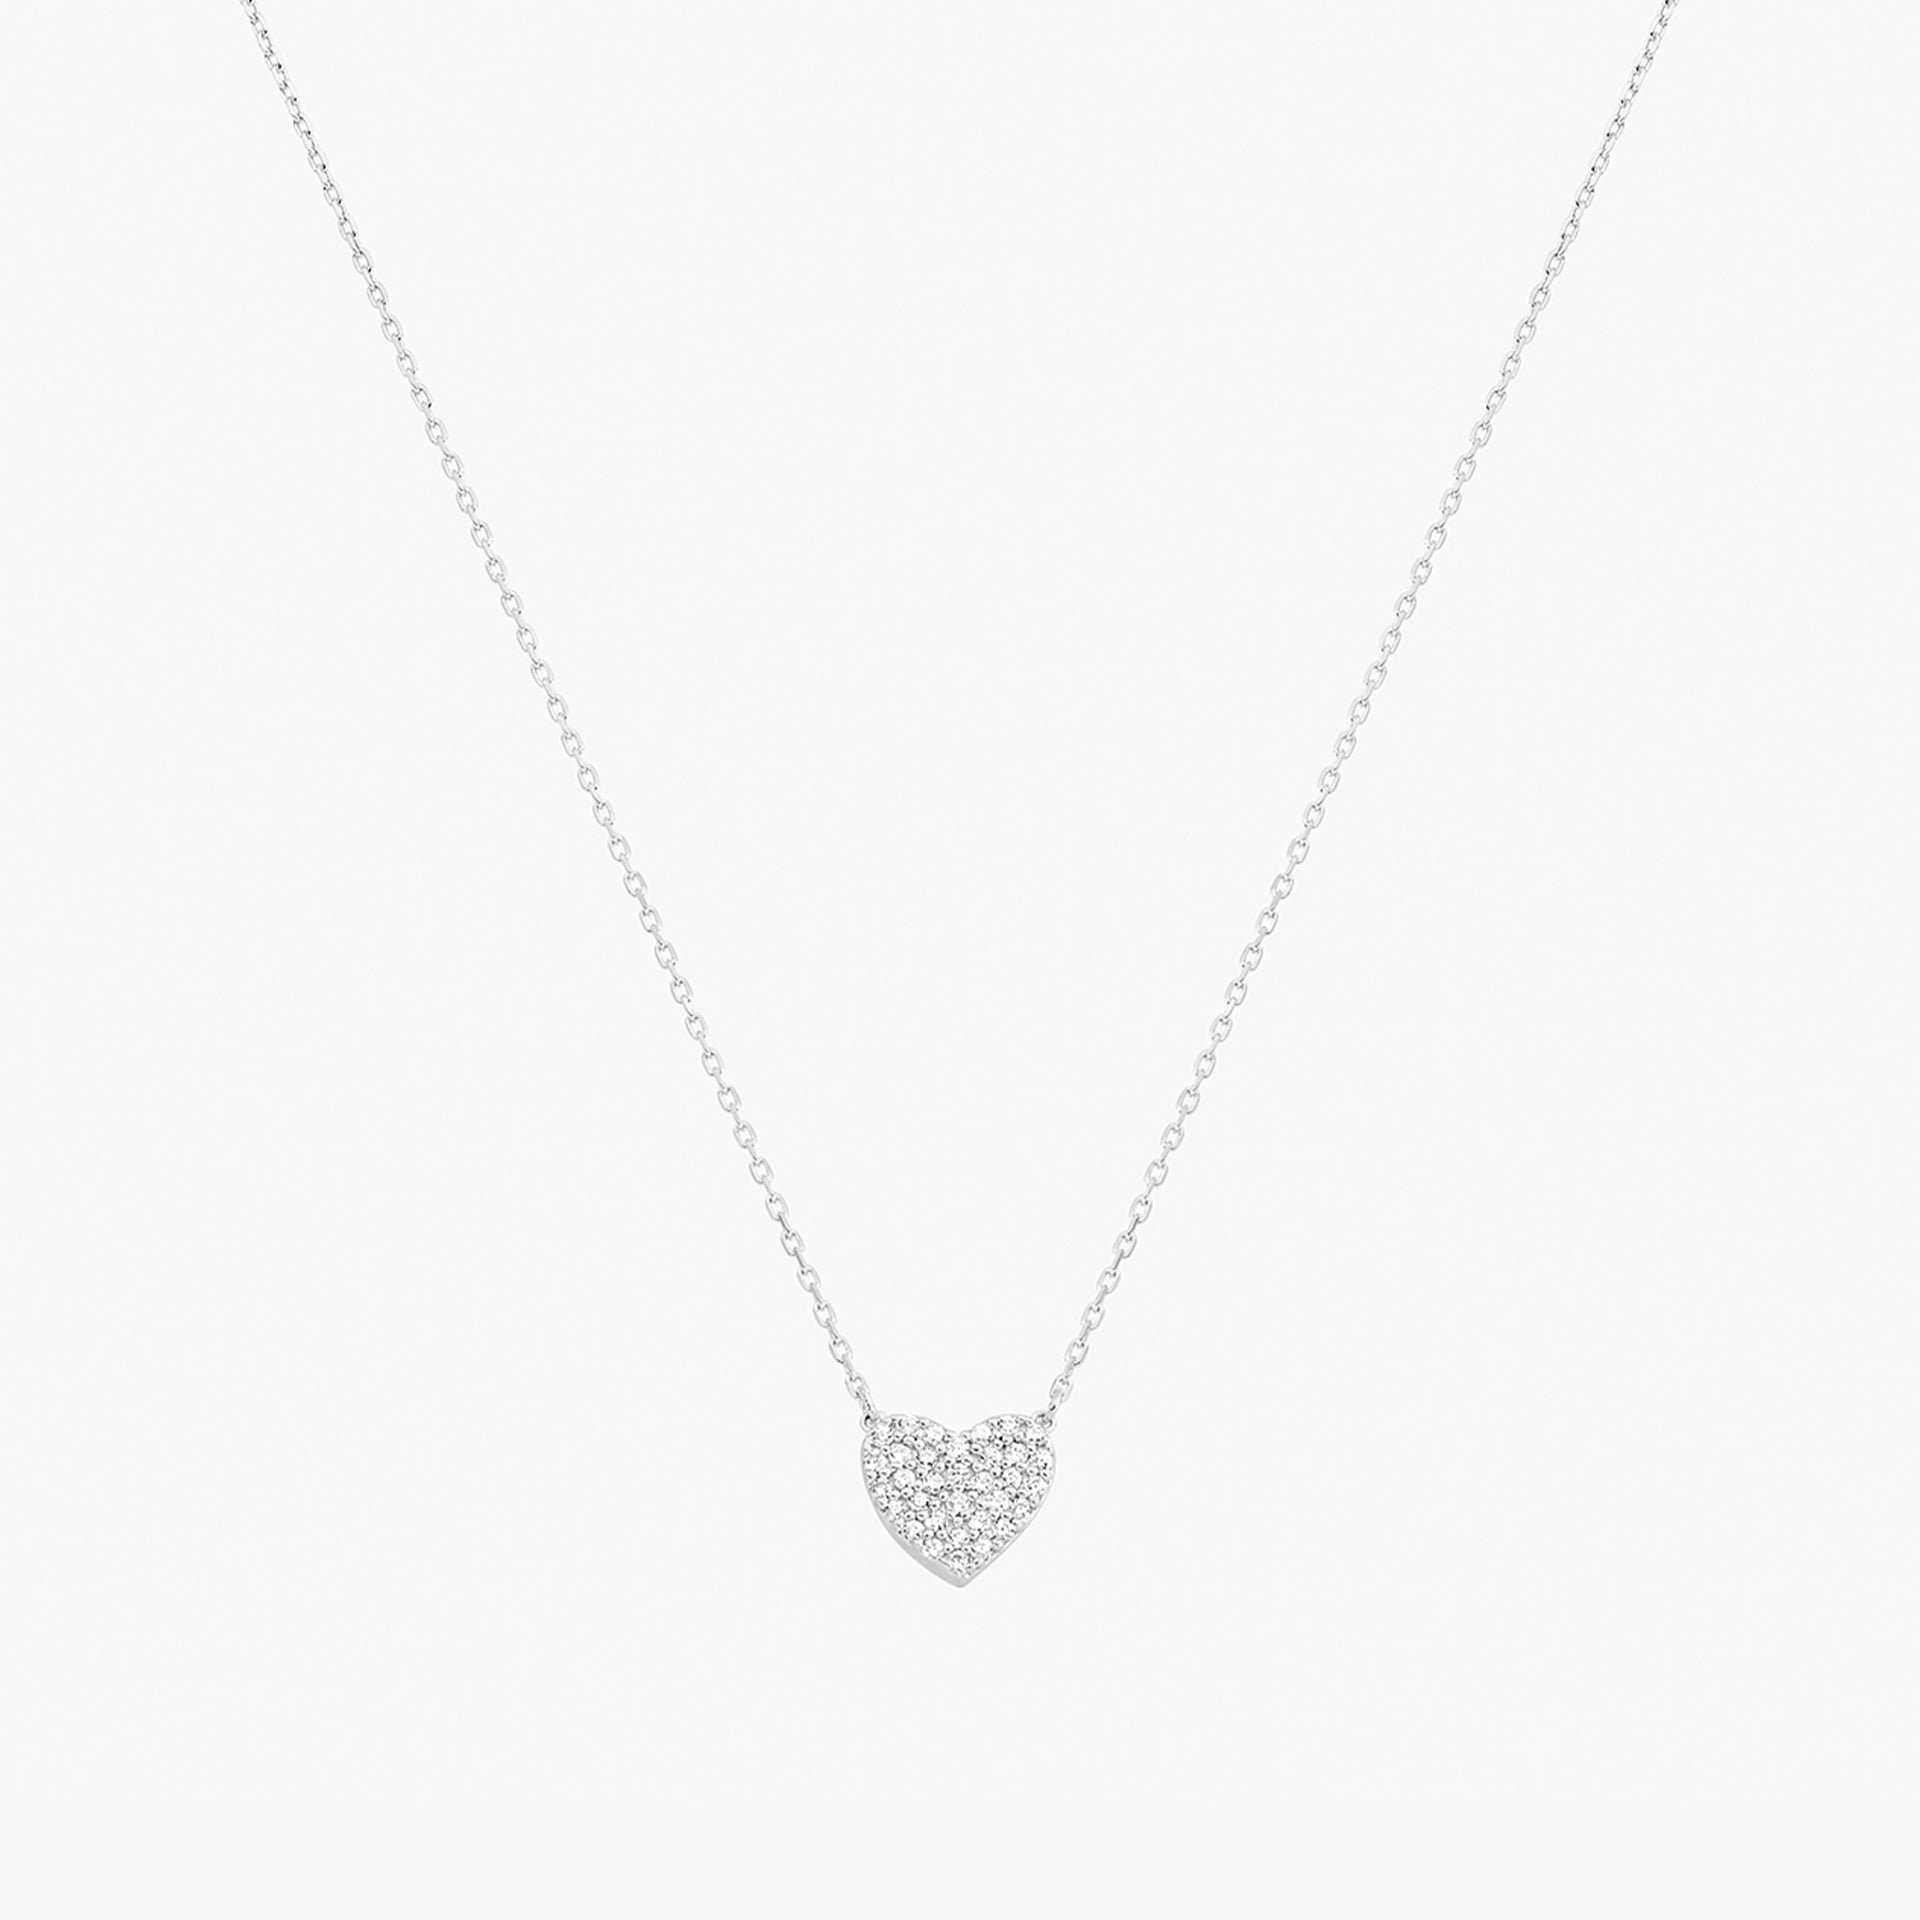 Crystal Heart Necklace – Bearfruit Jewelry